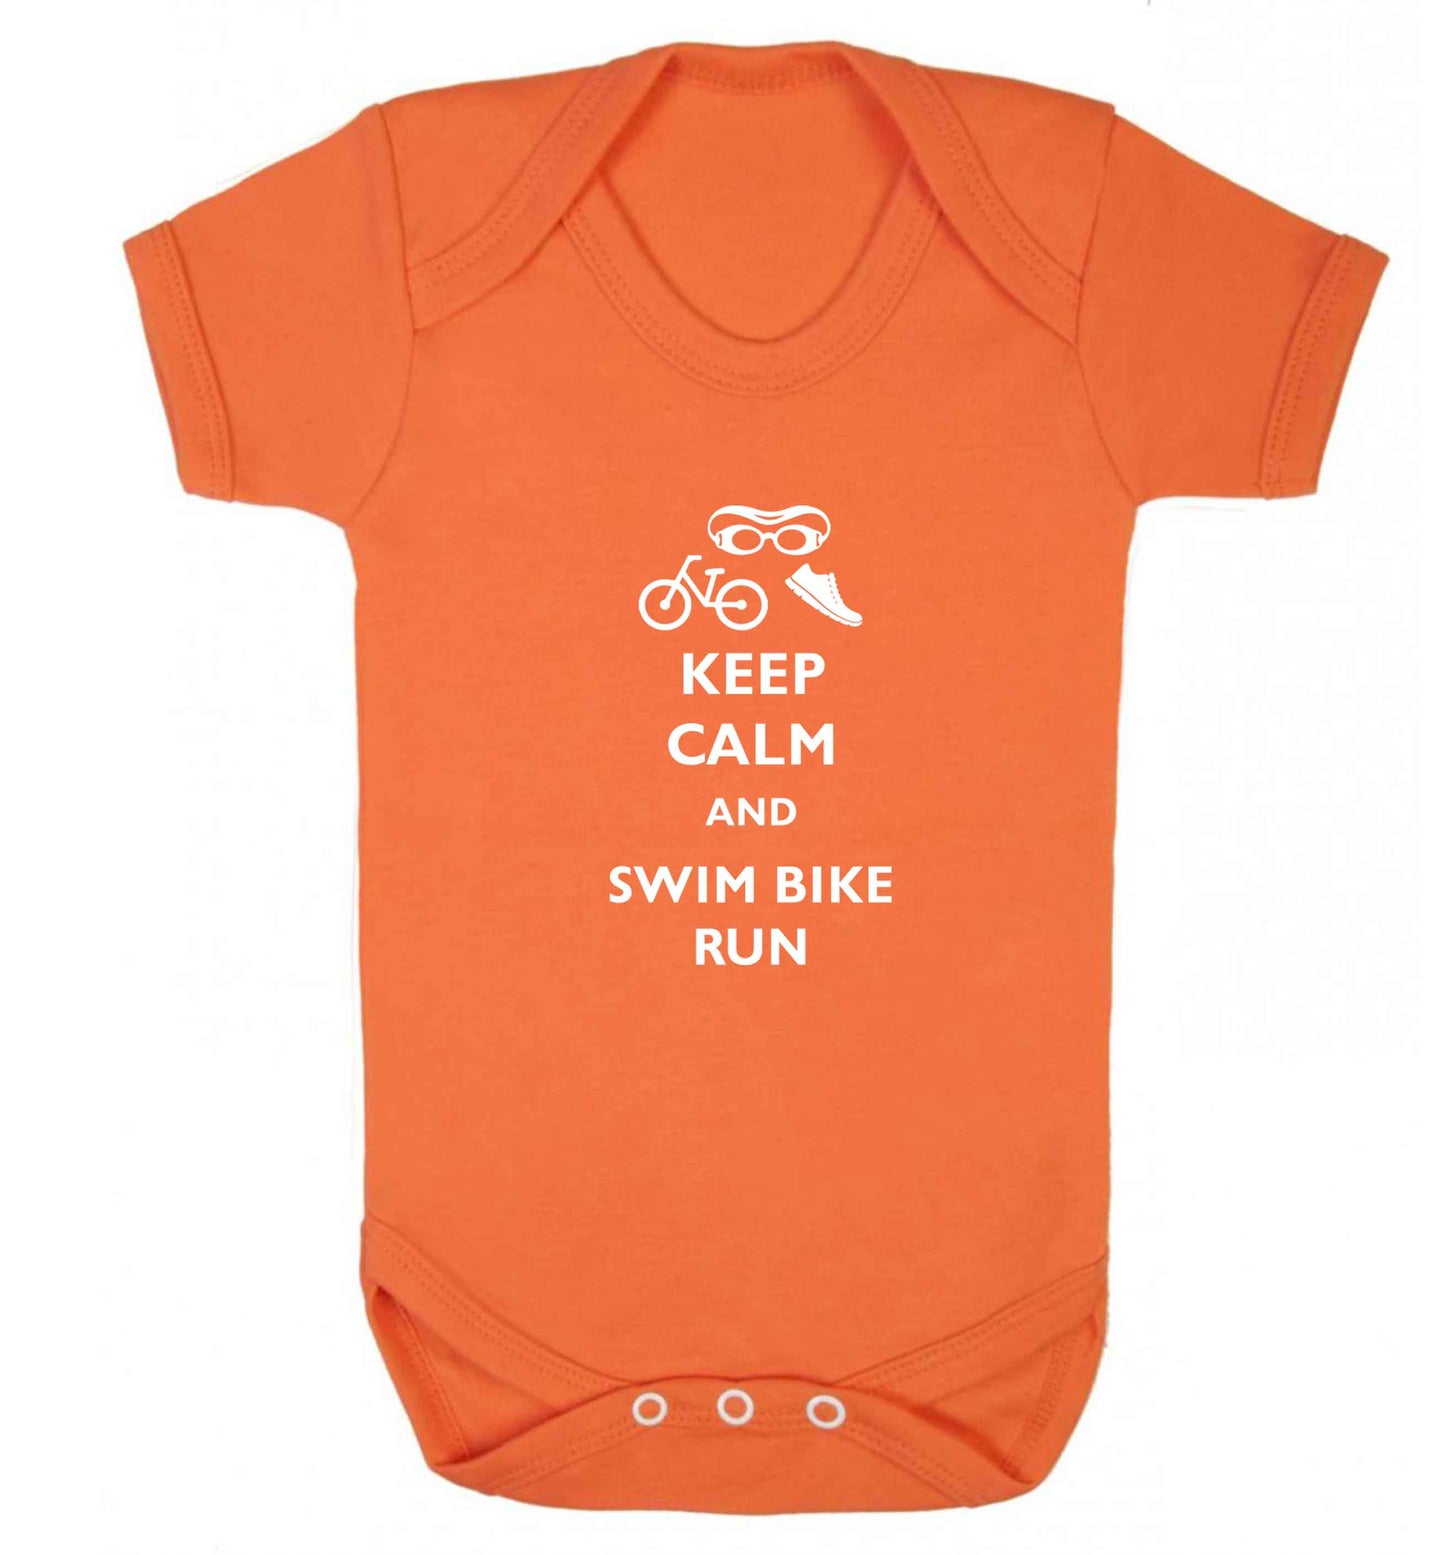 Keep calm and swim bike run baby vest orange 18-24 months